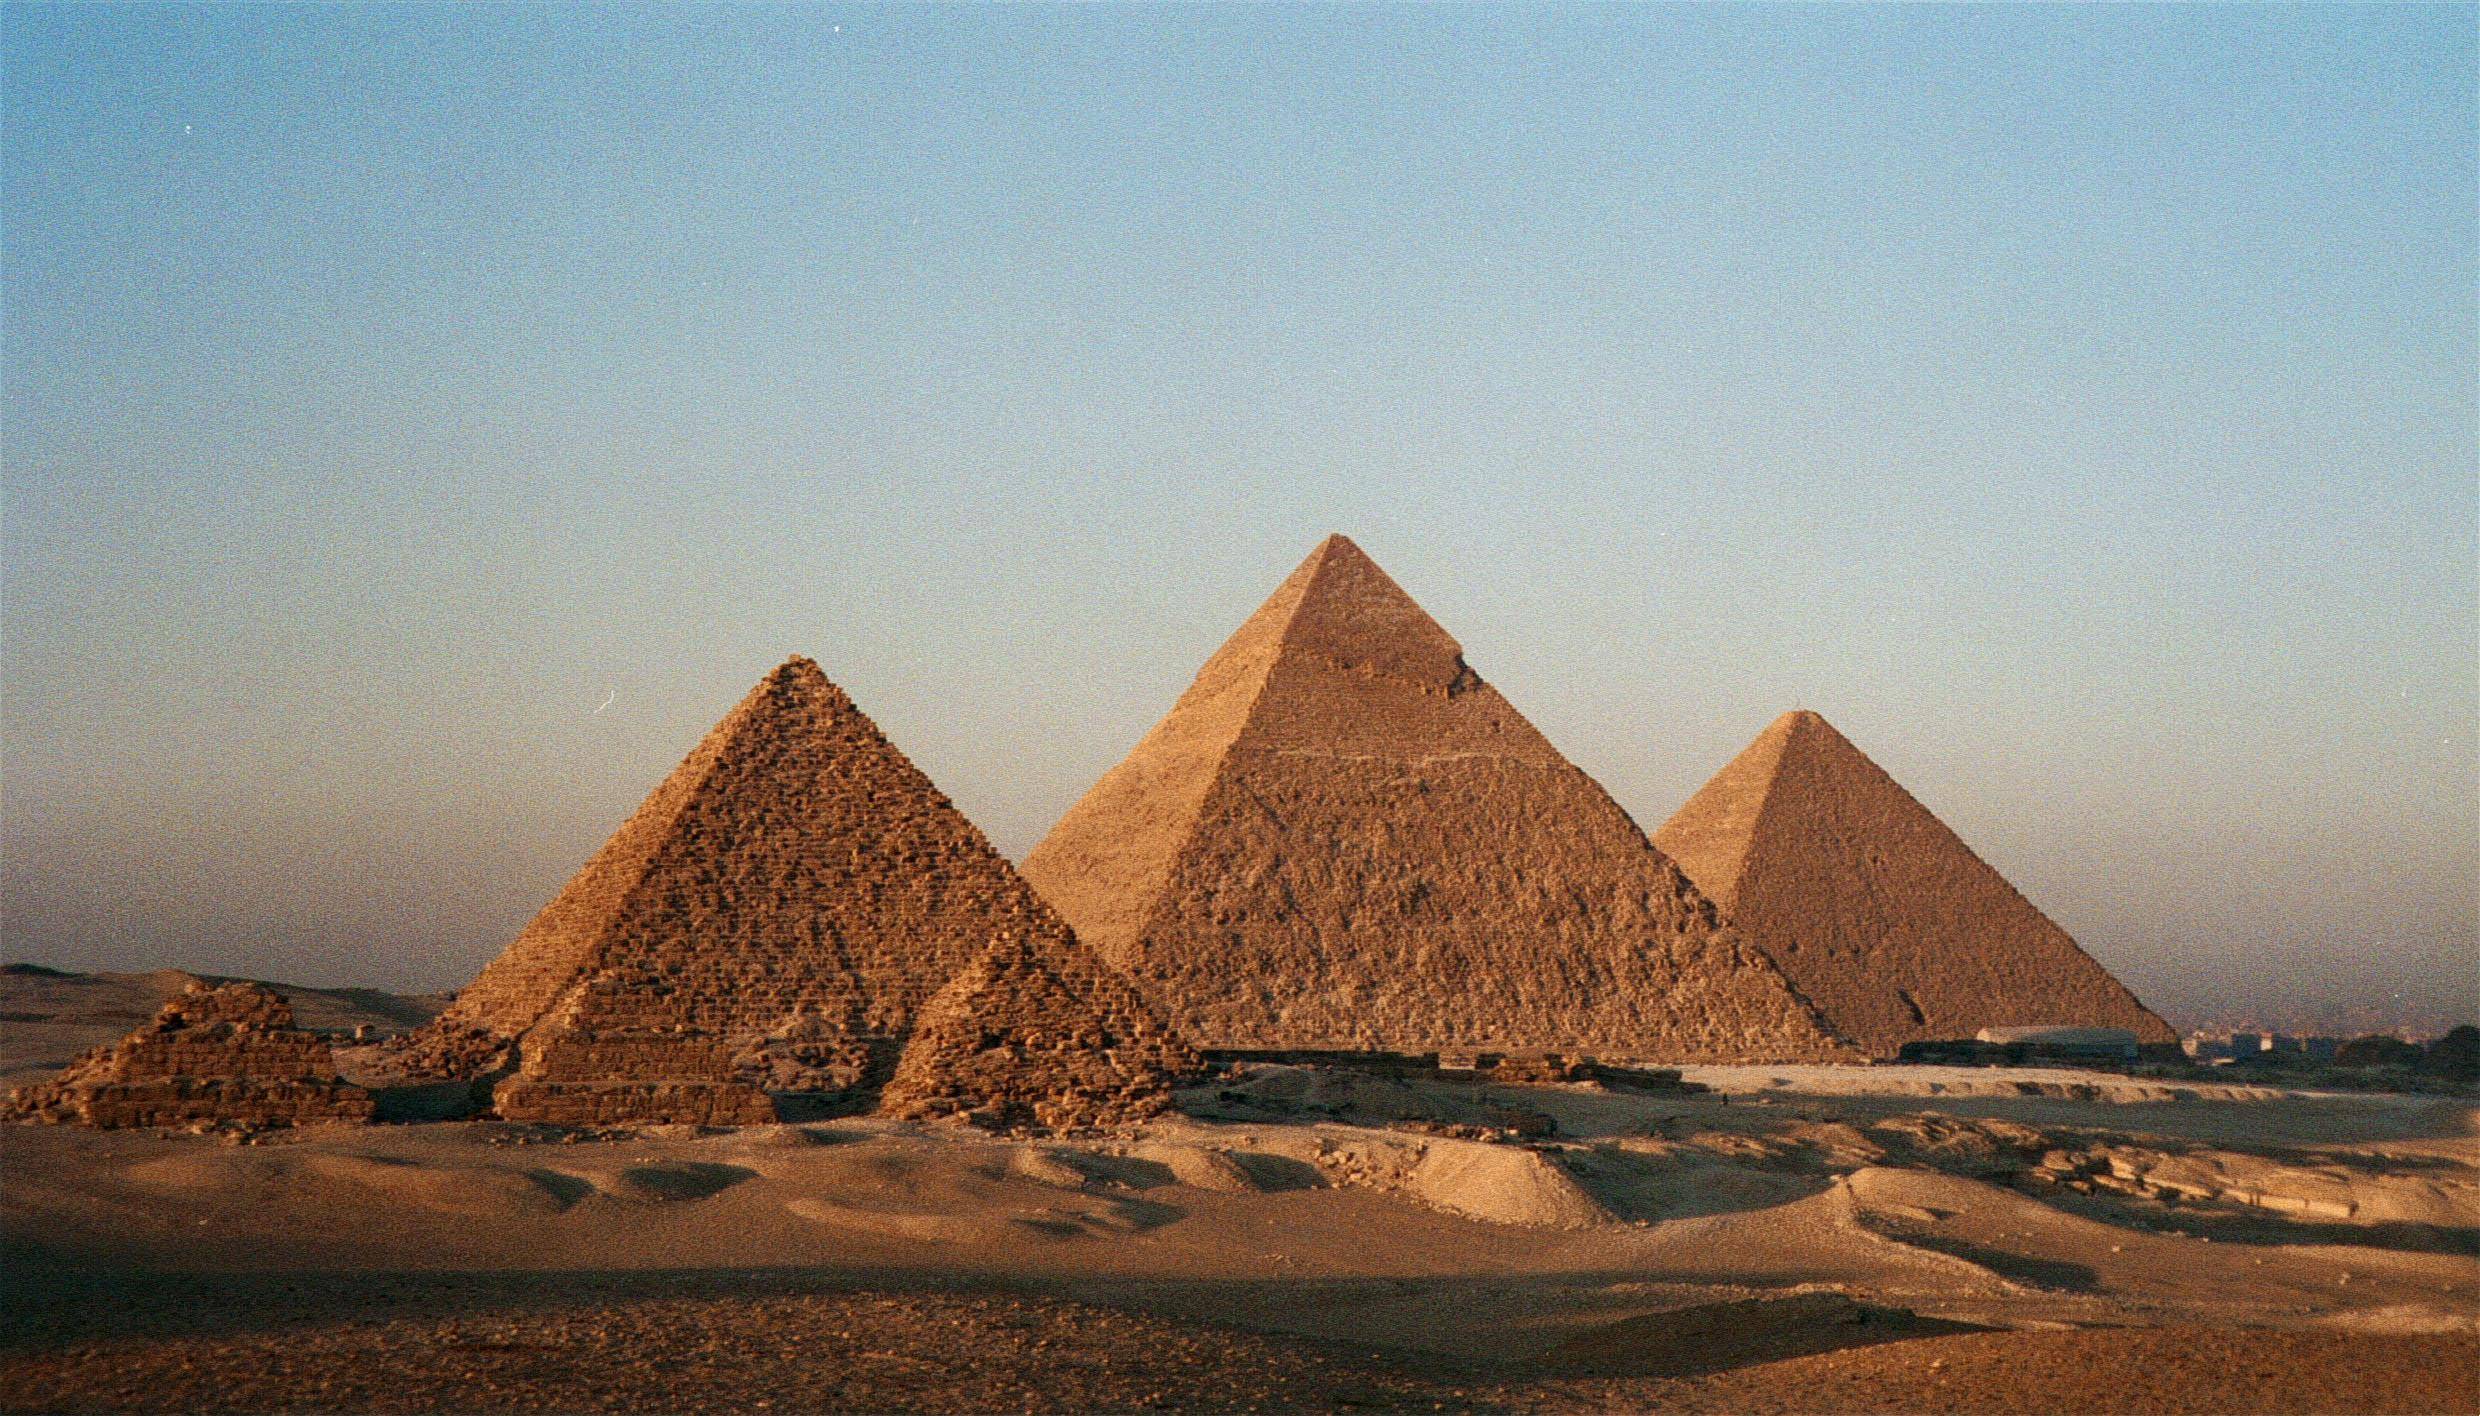 pyramids of Giza in Egypt